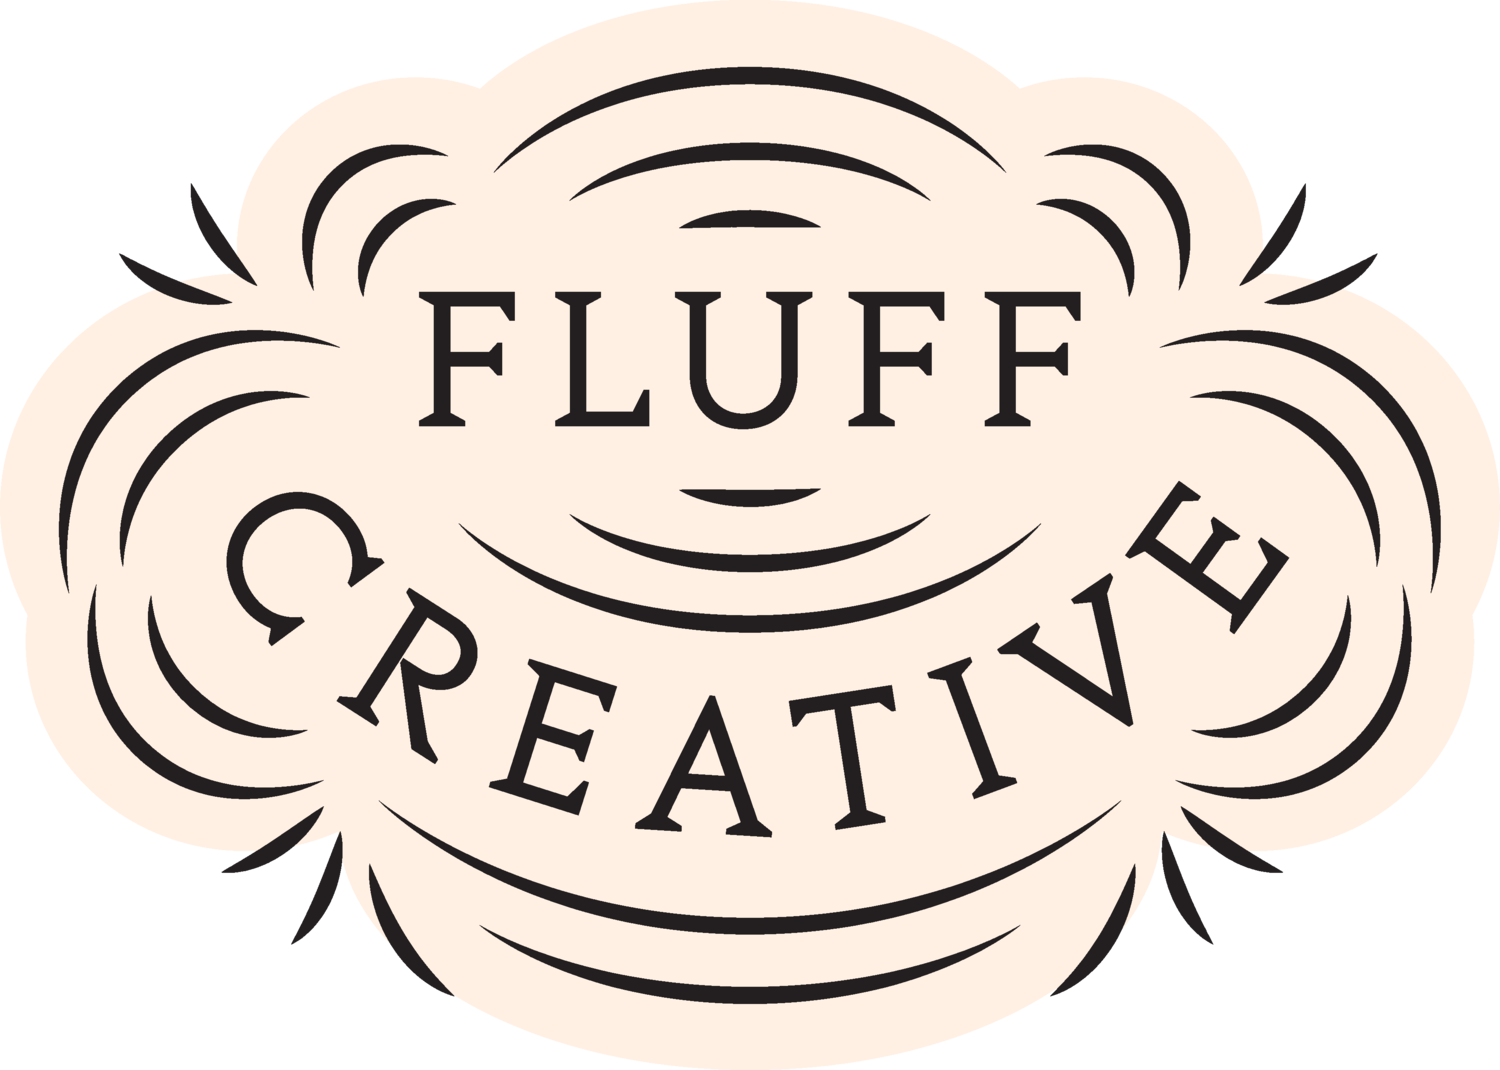 Fluff Creative Studio